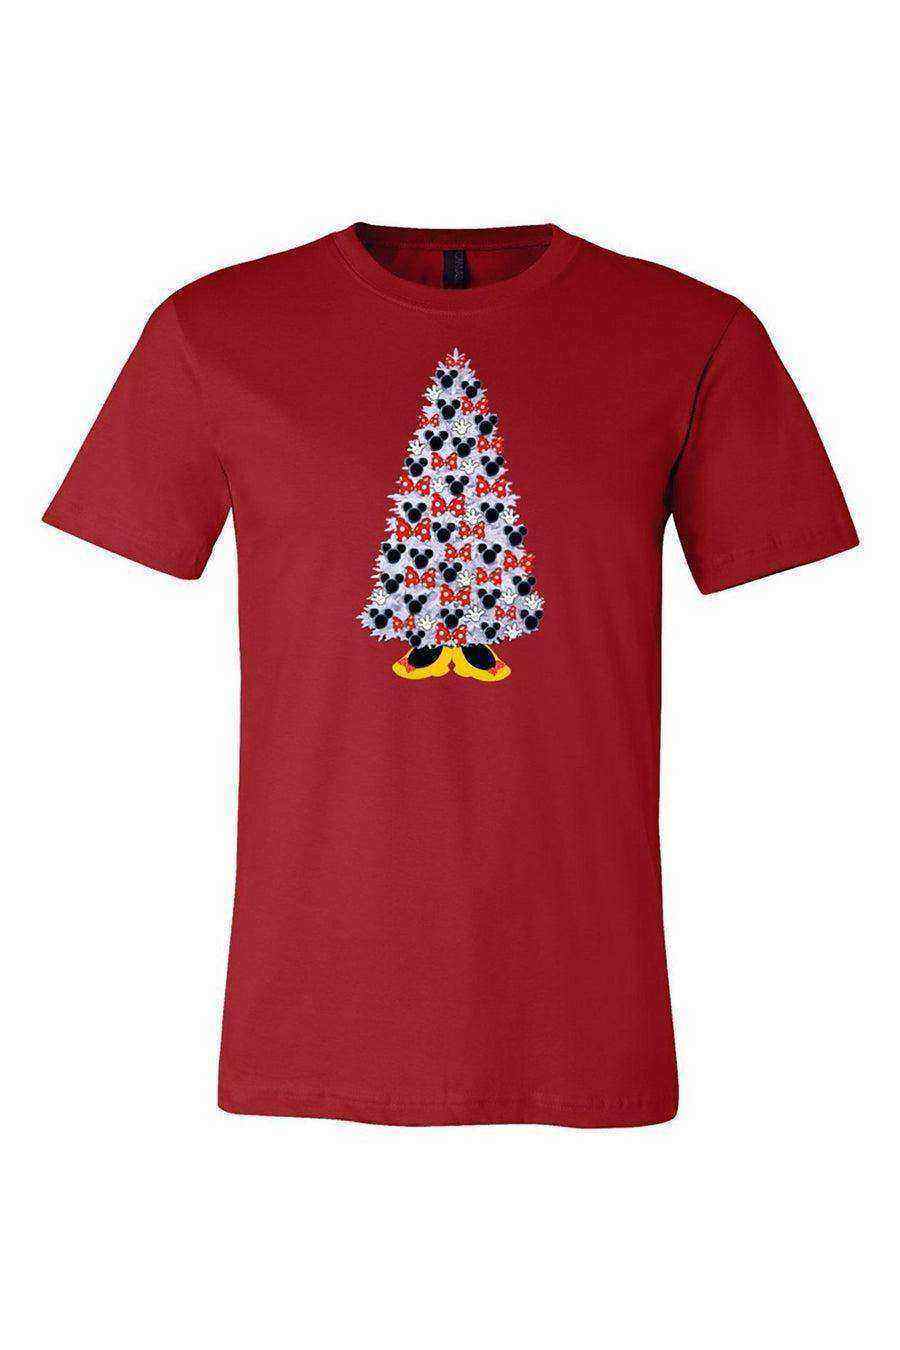 Minnie Christmas Tree Shirt - Dylan's Tees